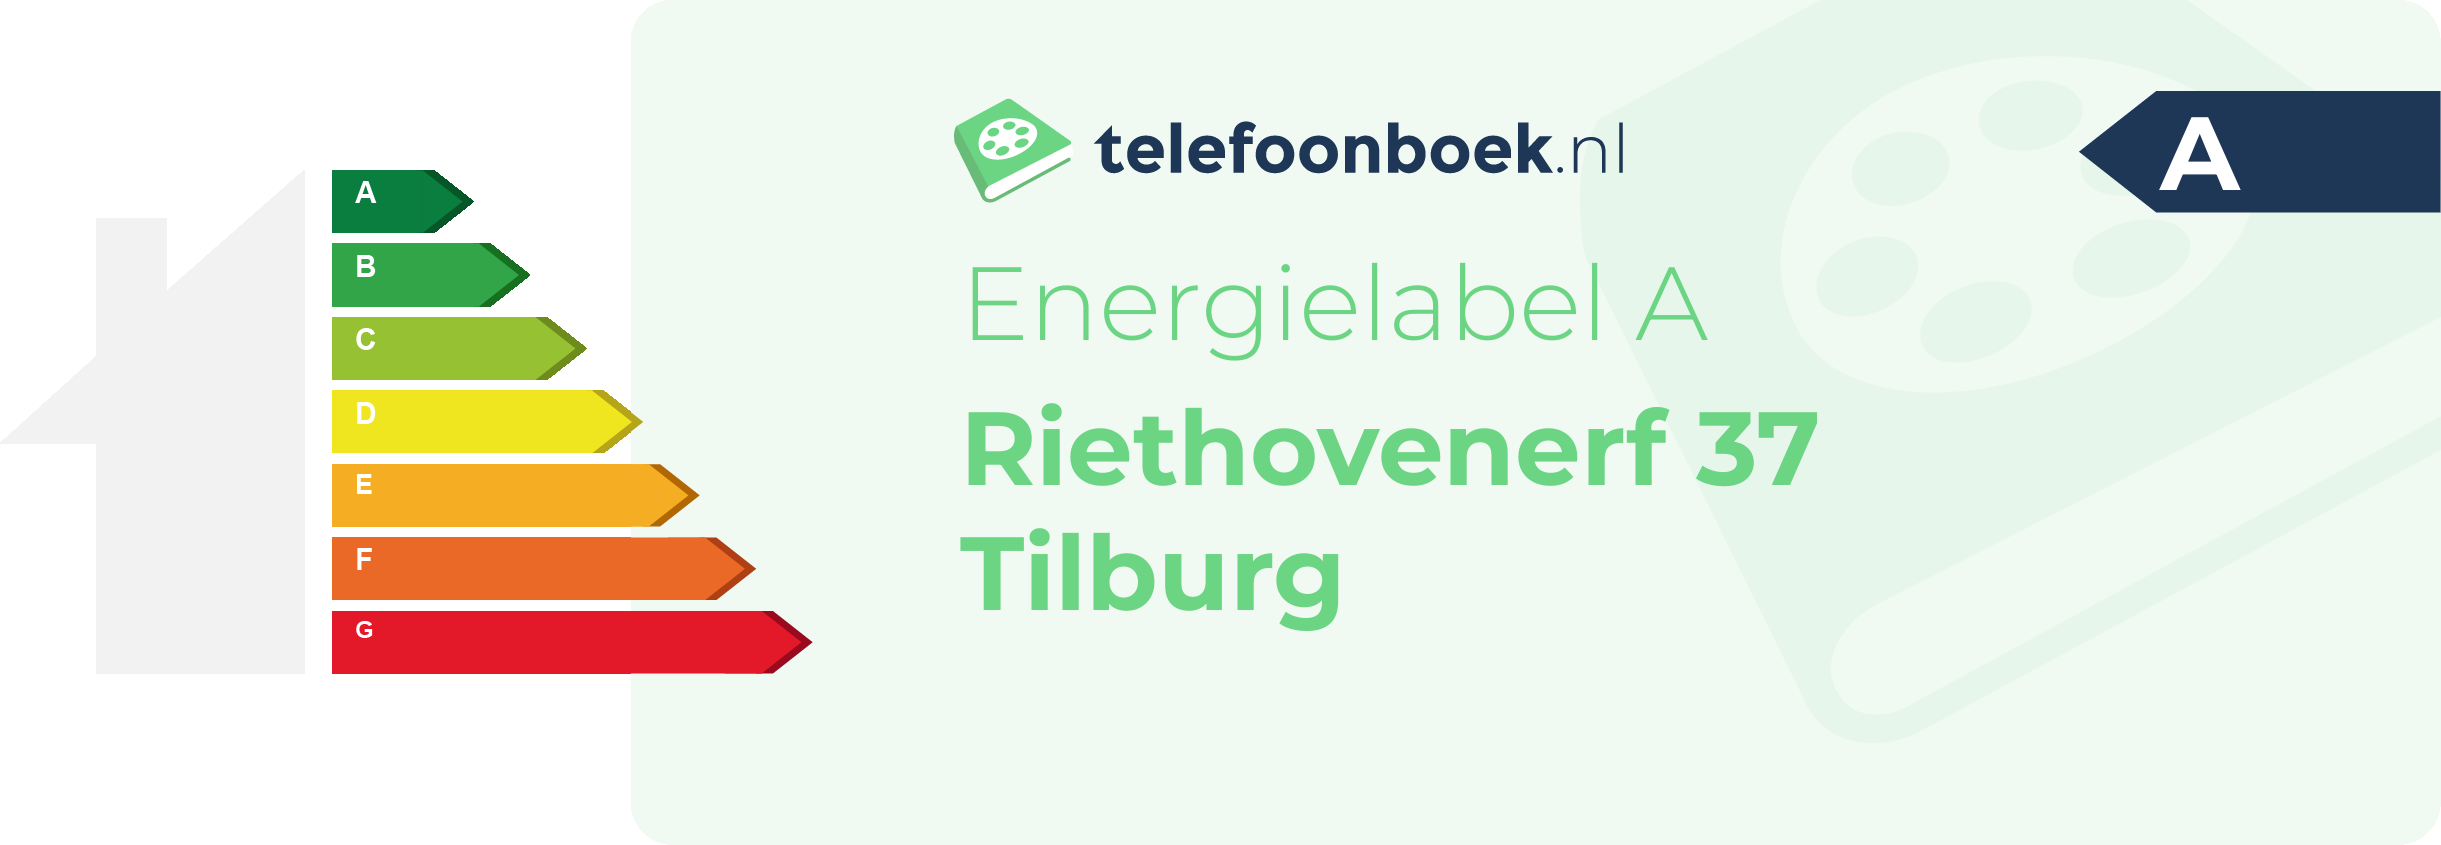 Energielabel Riethovenerf 37 Tilburg